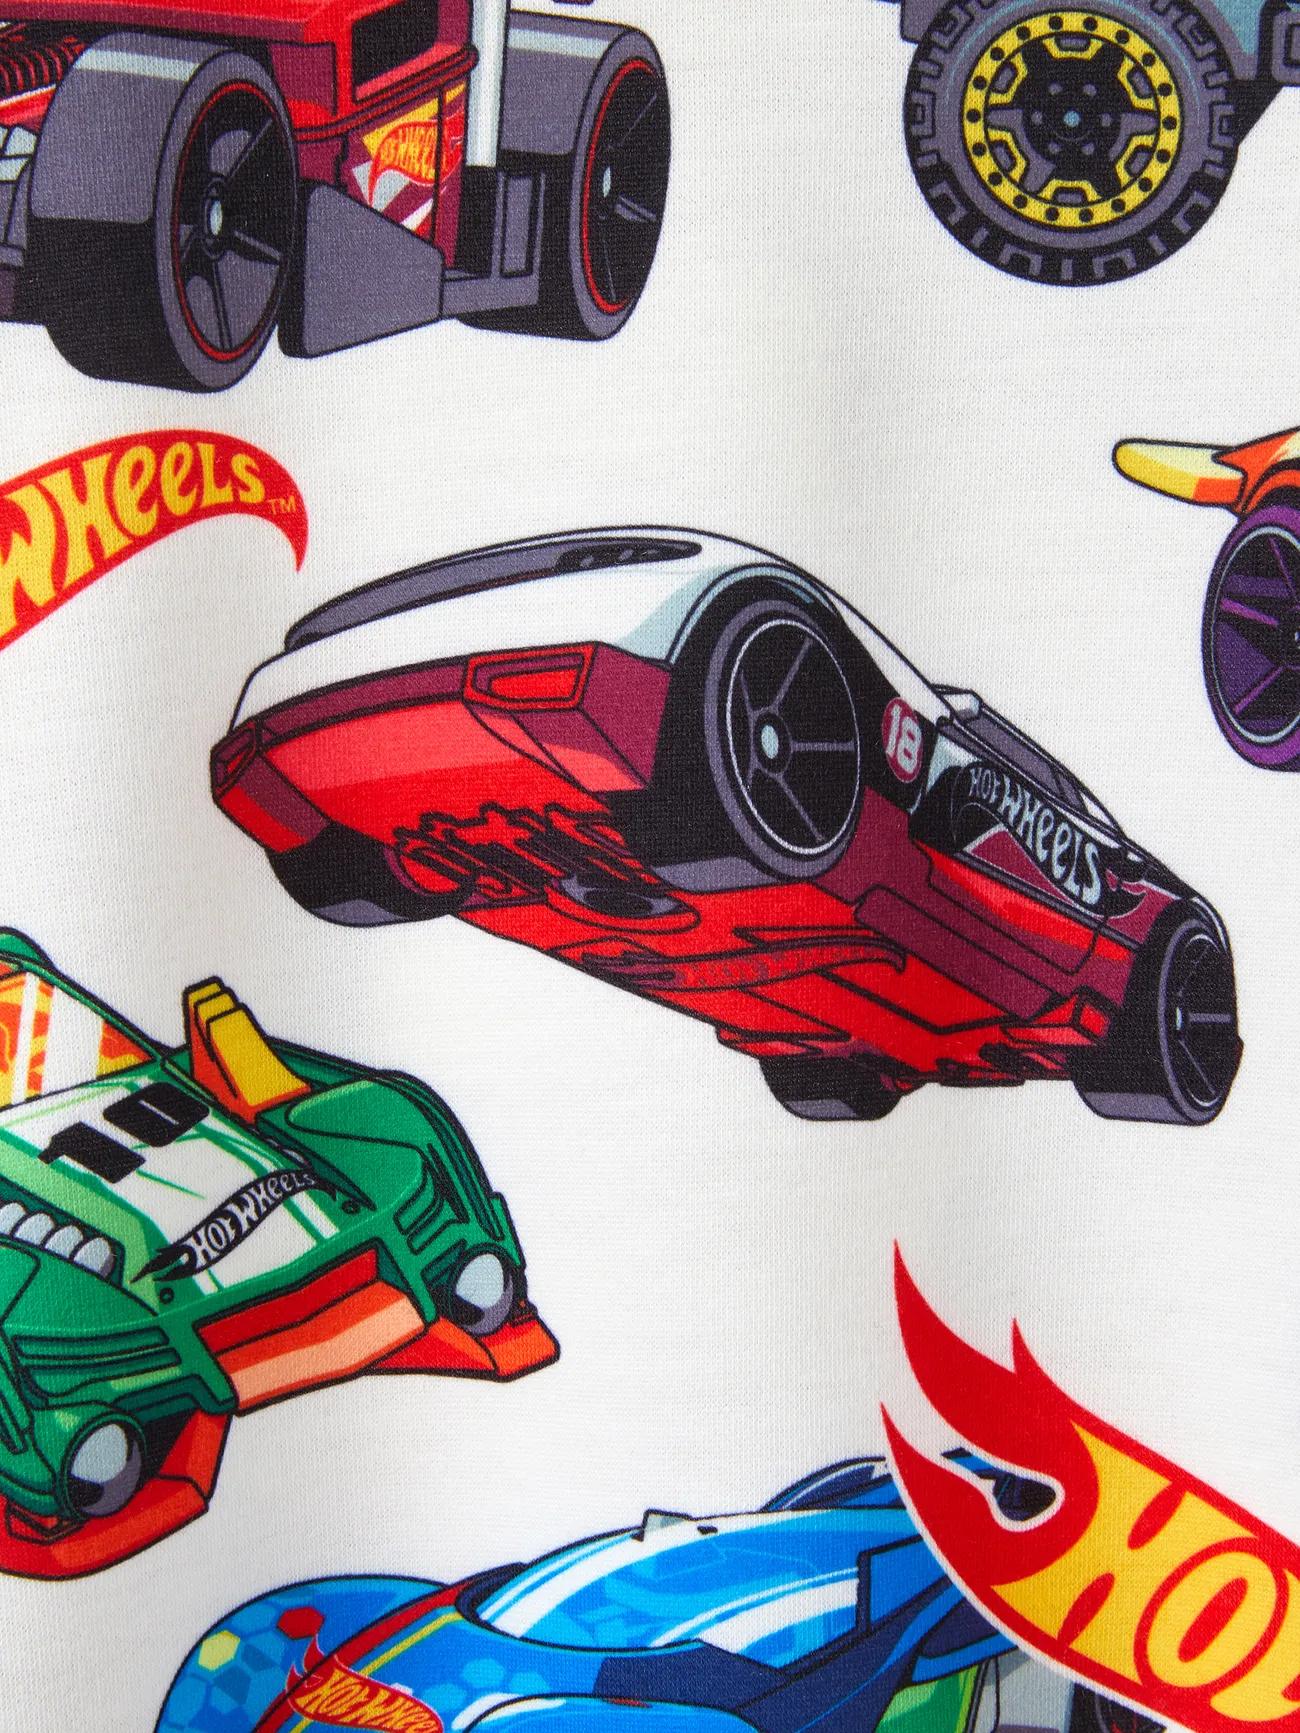 Hot Wheels 2pcs Toddler Boy Vehicle Race Car Print Sweatshirt and Elasticized Cotton Pants Set Black big image 1